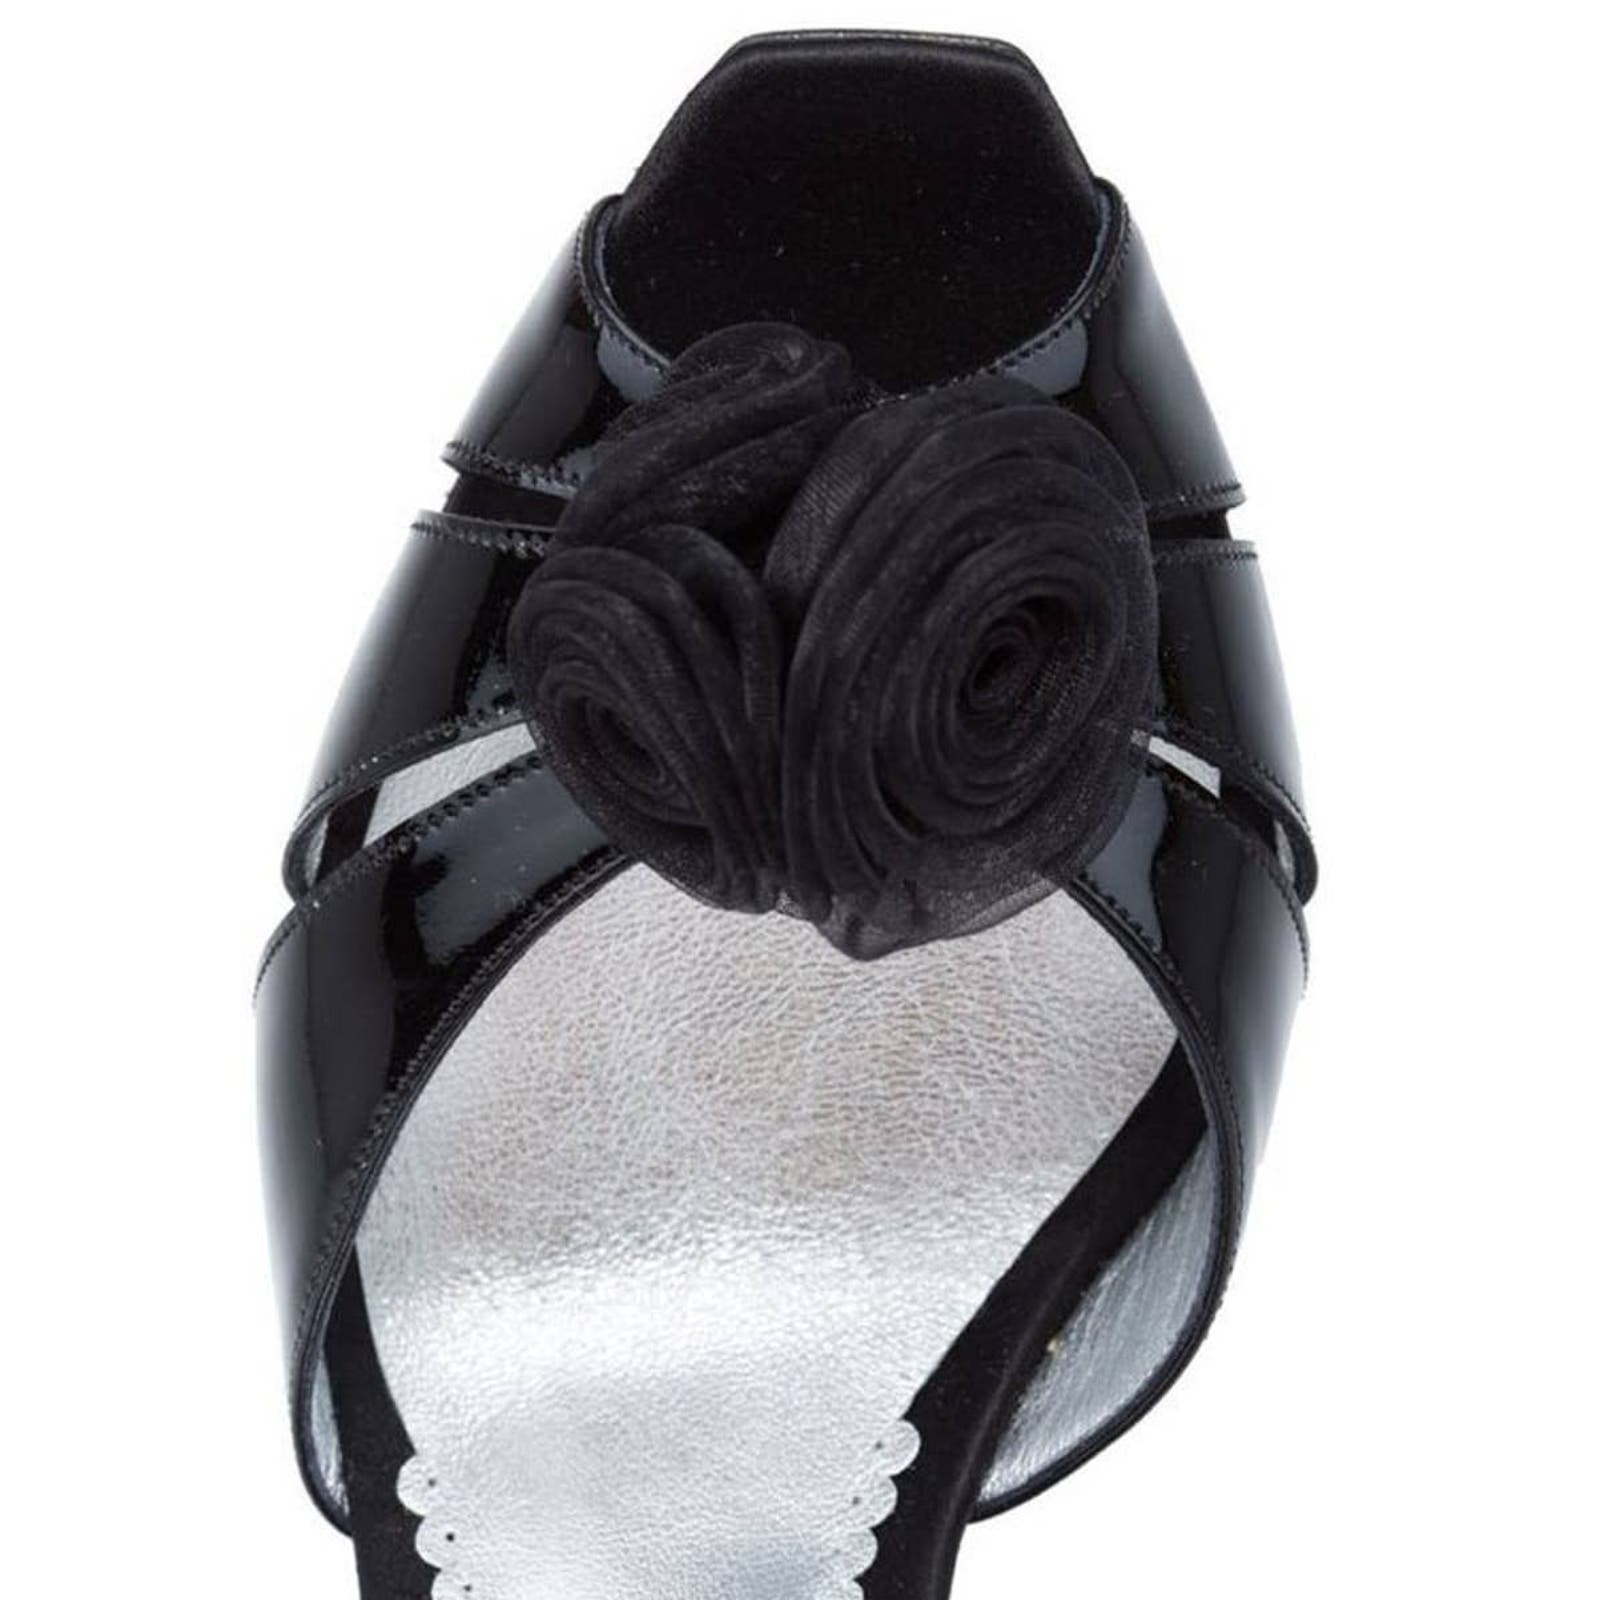 Giorgio Armani Women US 6.5 Black Leather Wedge Heels Peep Toe Pumps Shoes